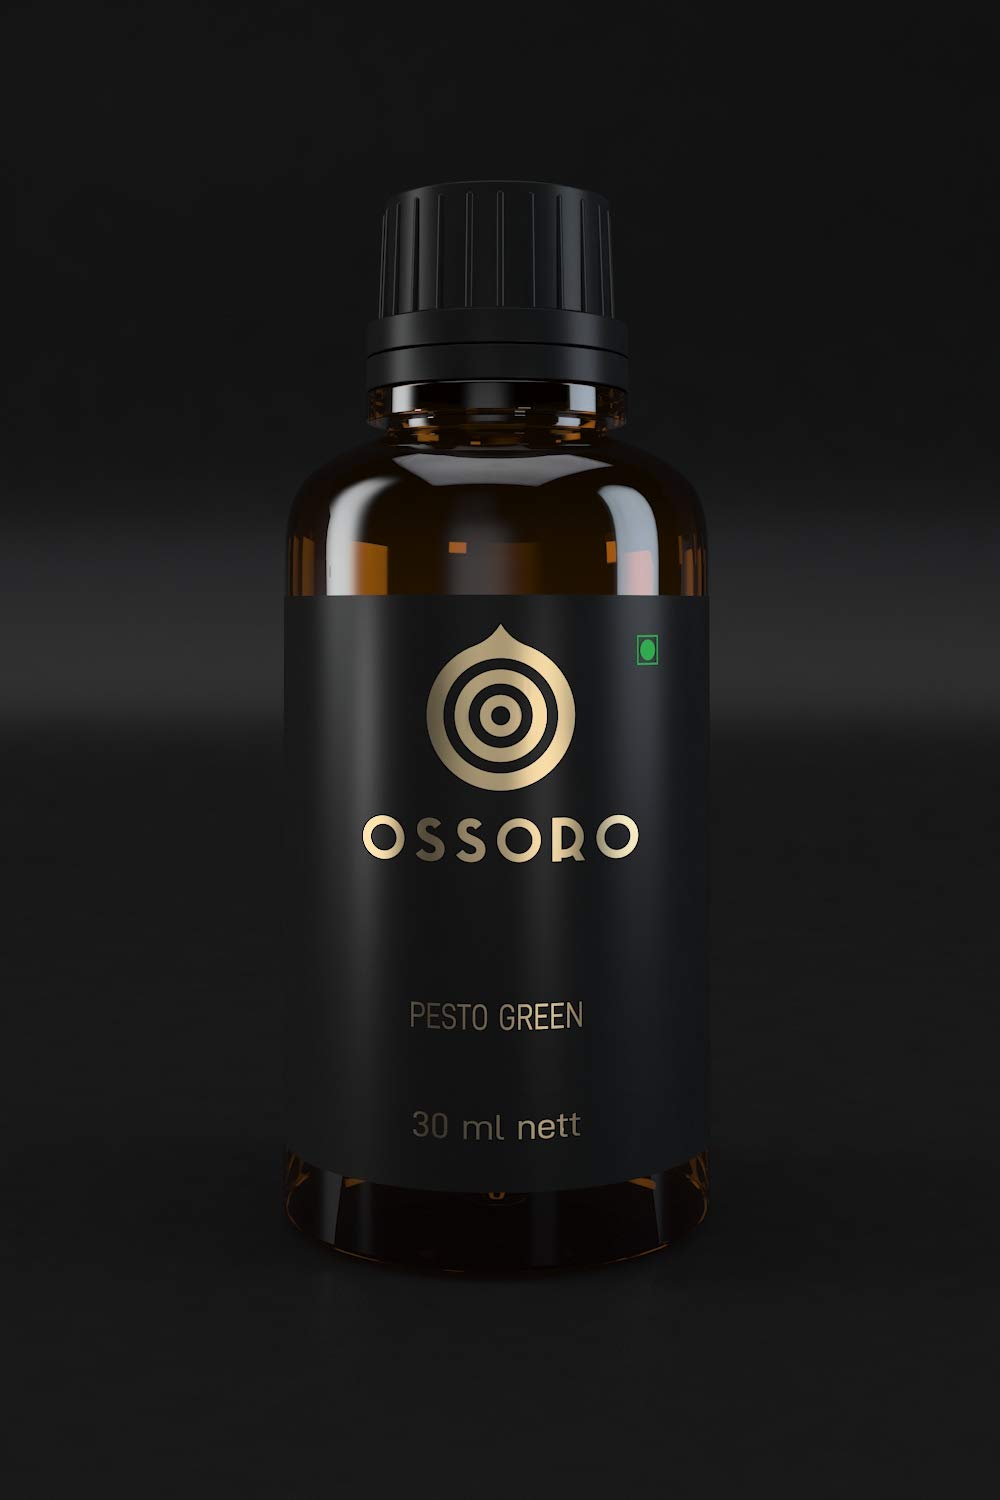 Ossoro Pesto Green Extract Image